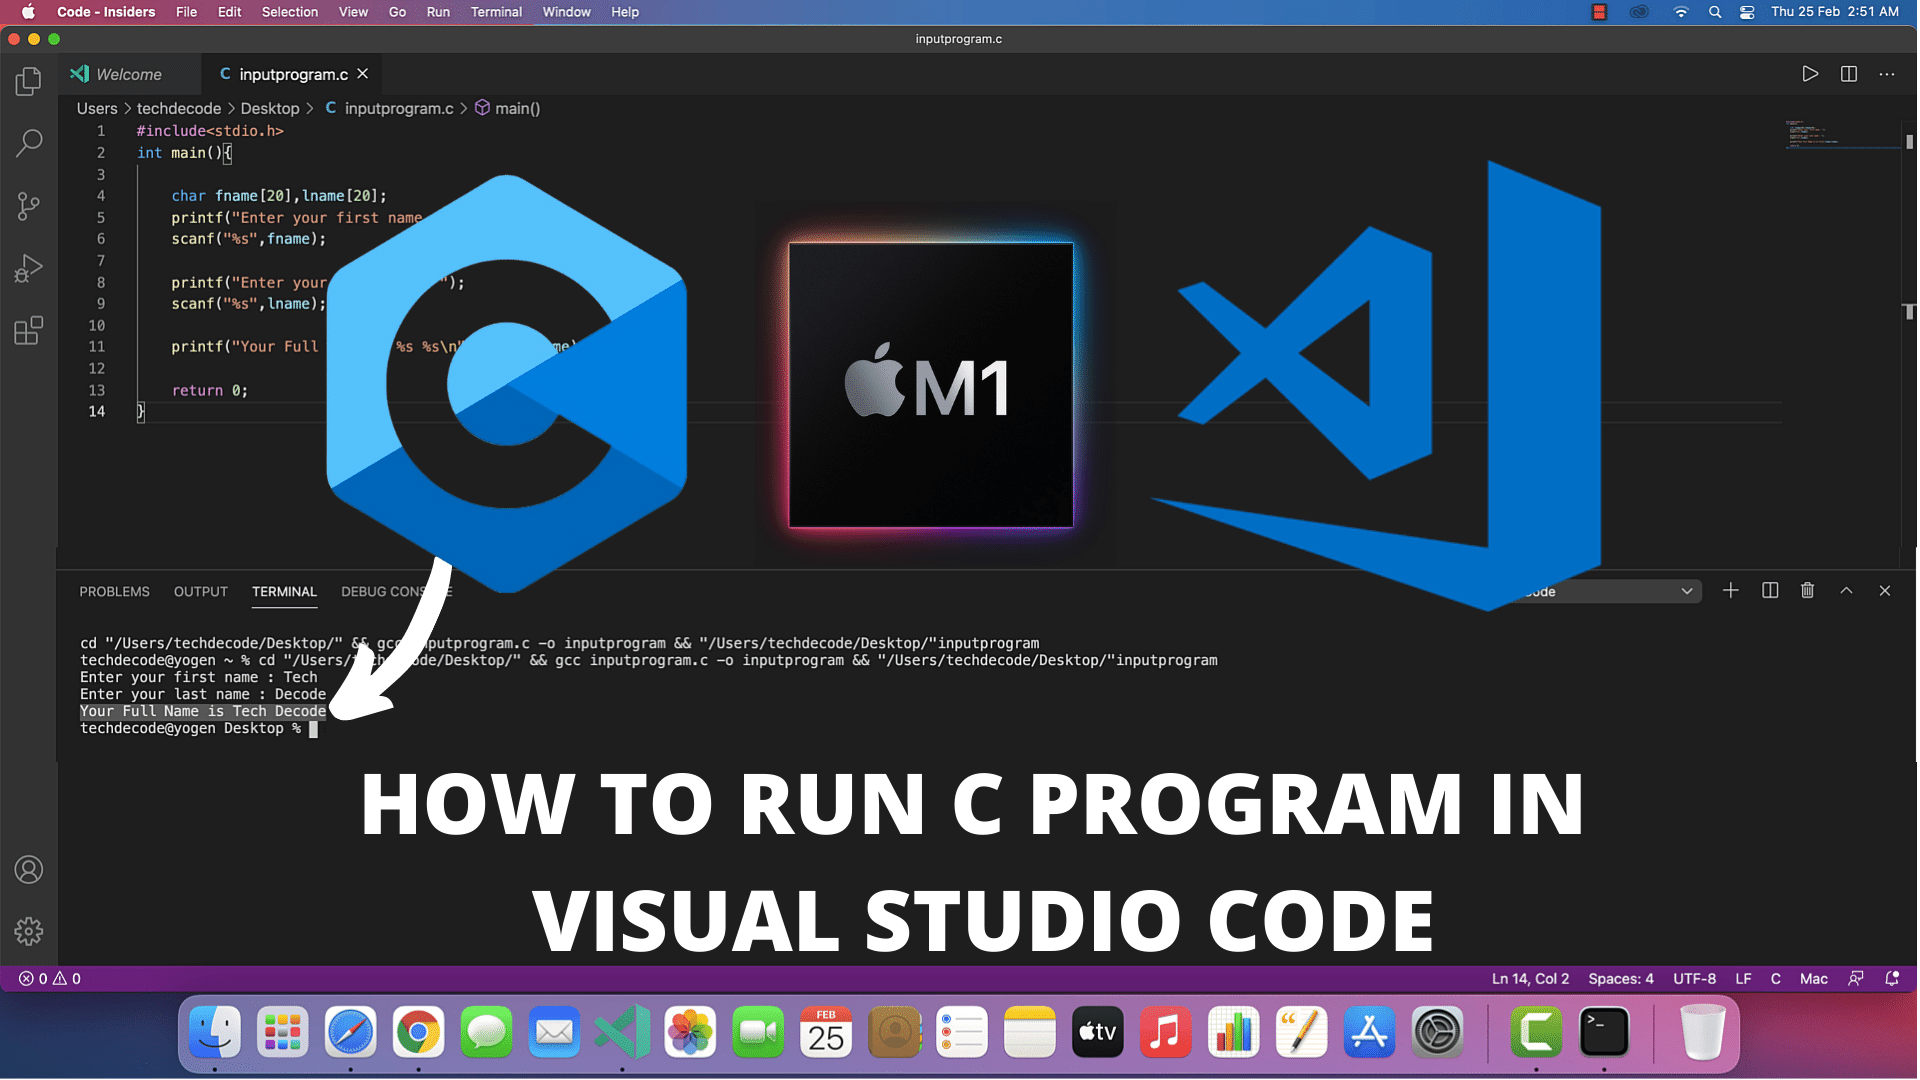 java coding for mac